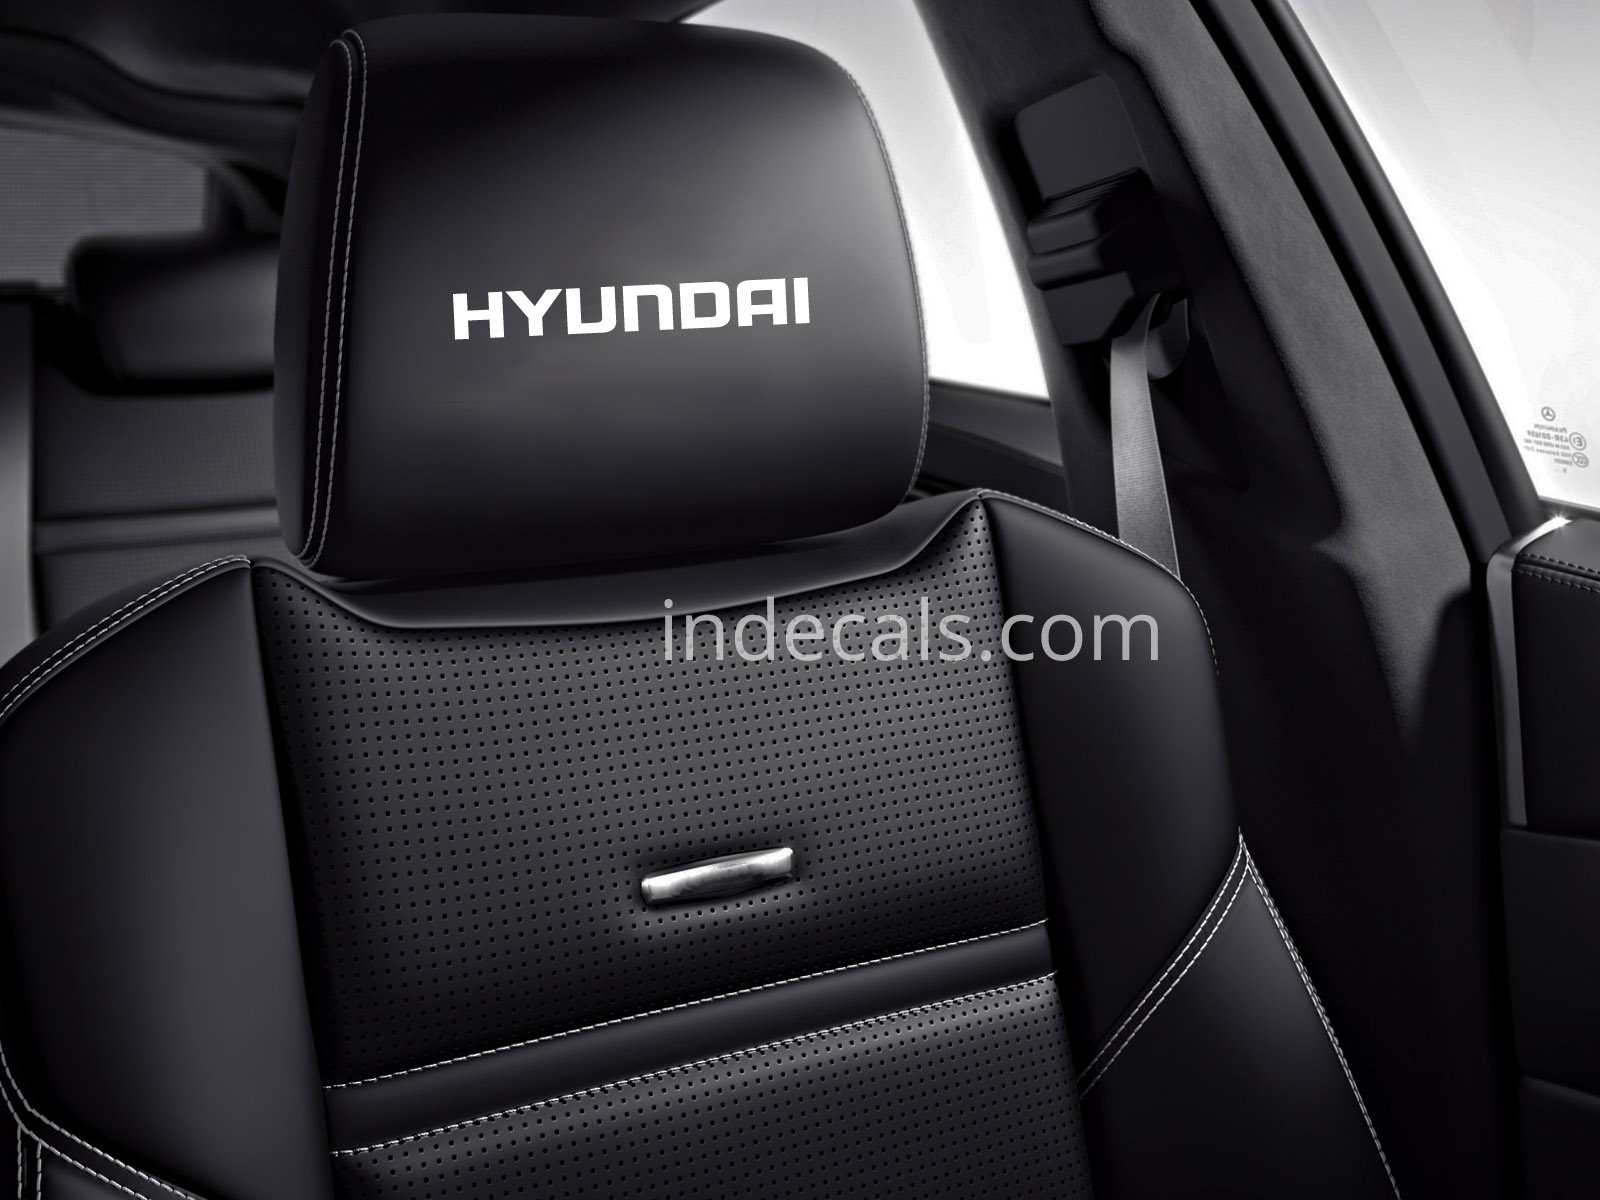 6 x Hyundai Stickers for Headrests - White